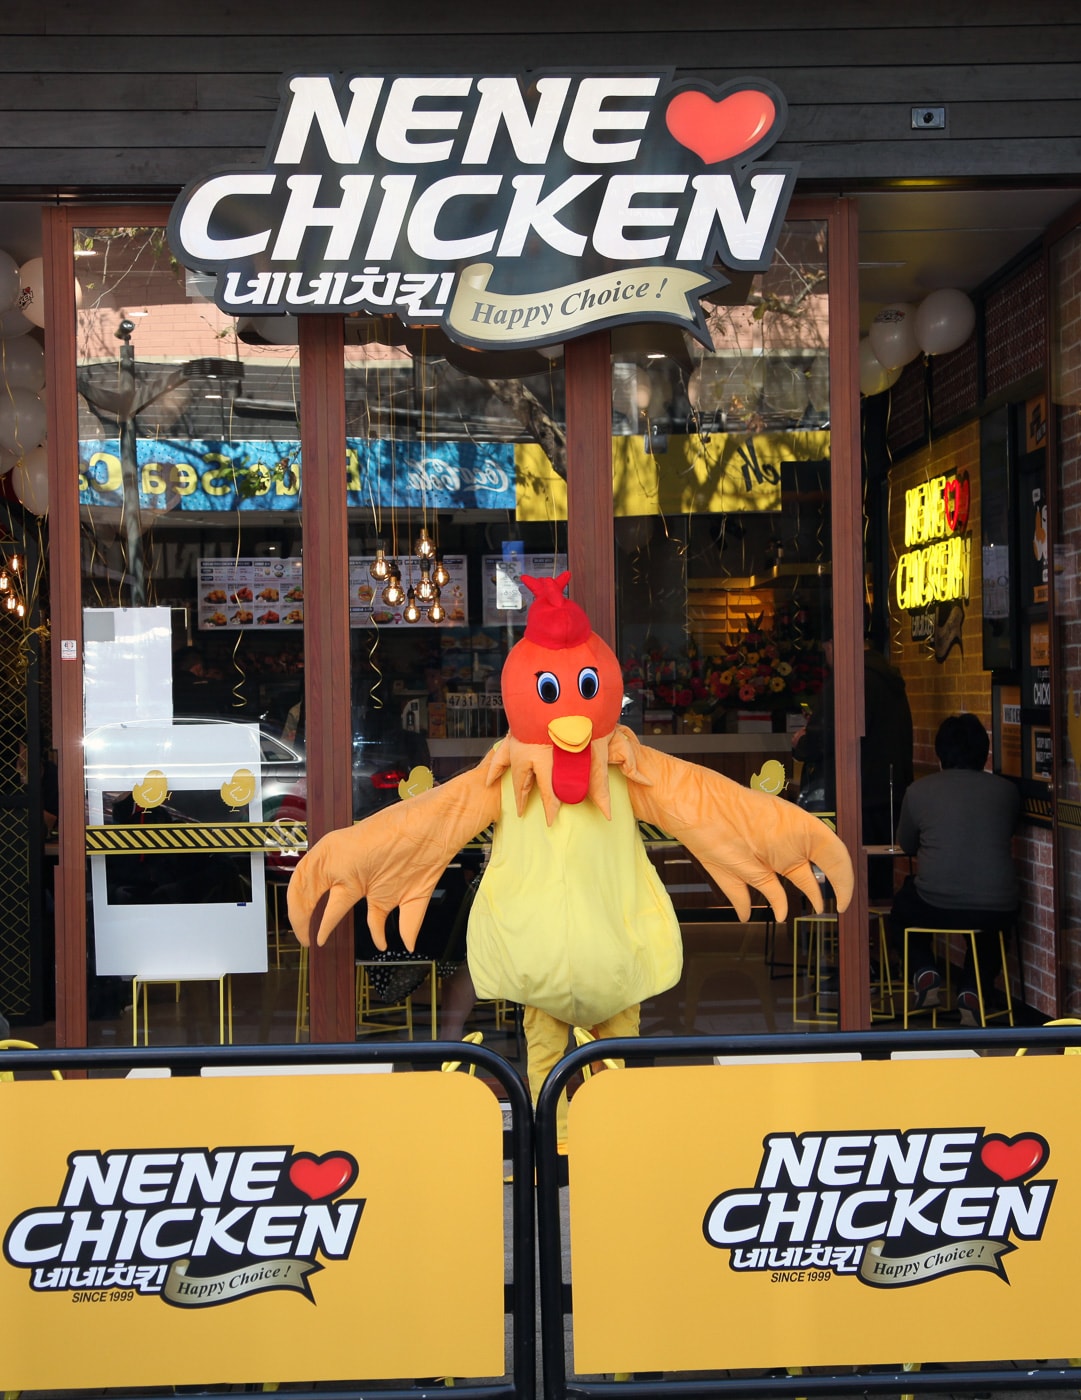 Nene Chicken Outlet is South Korea